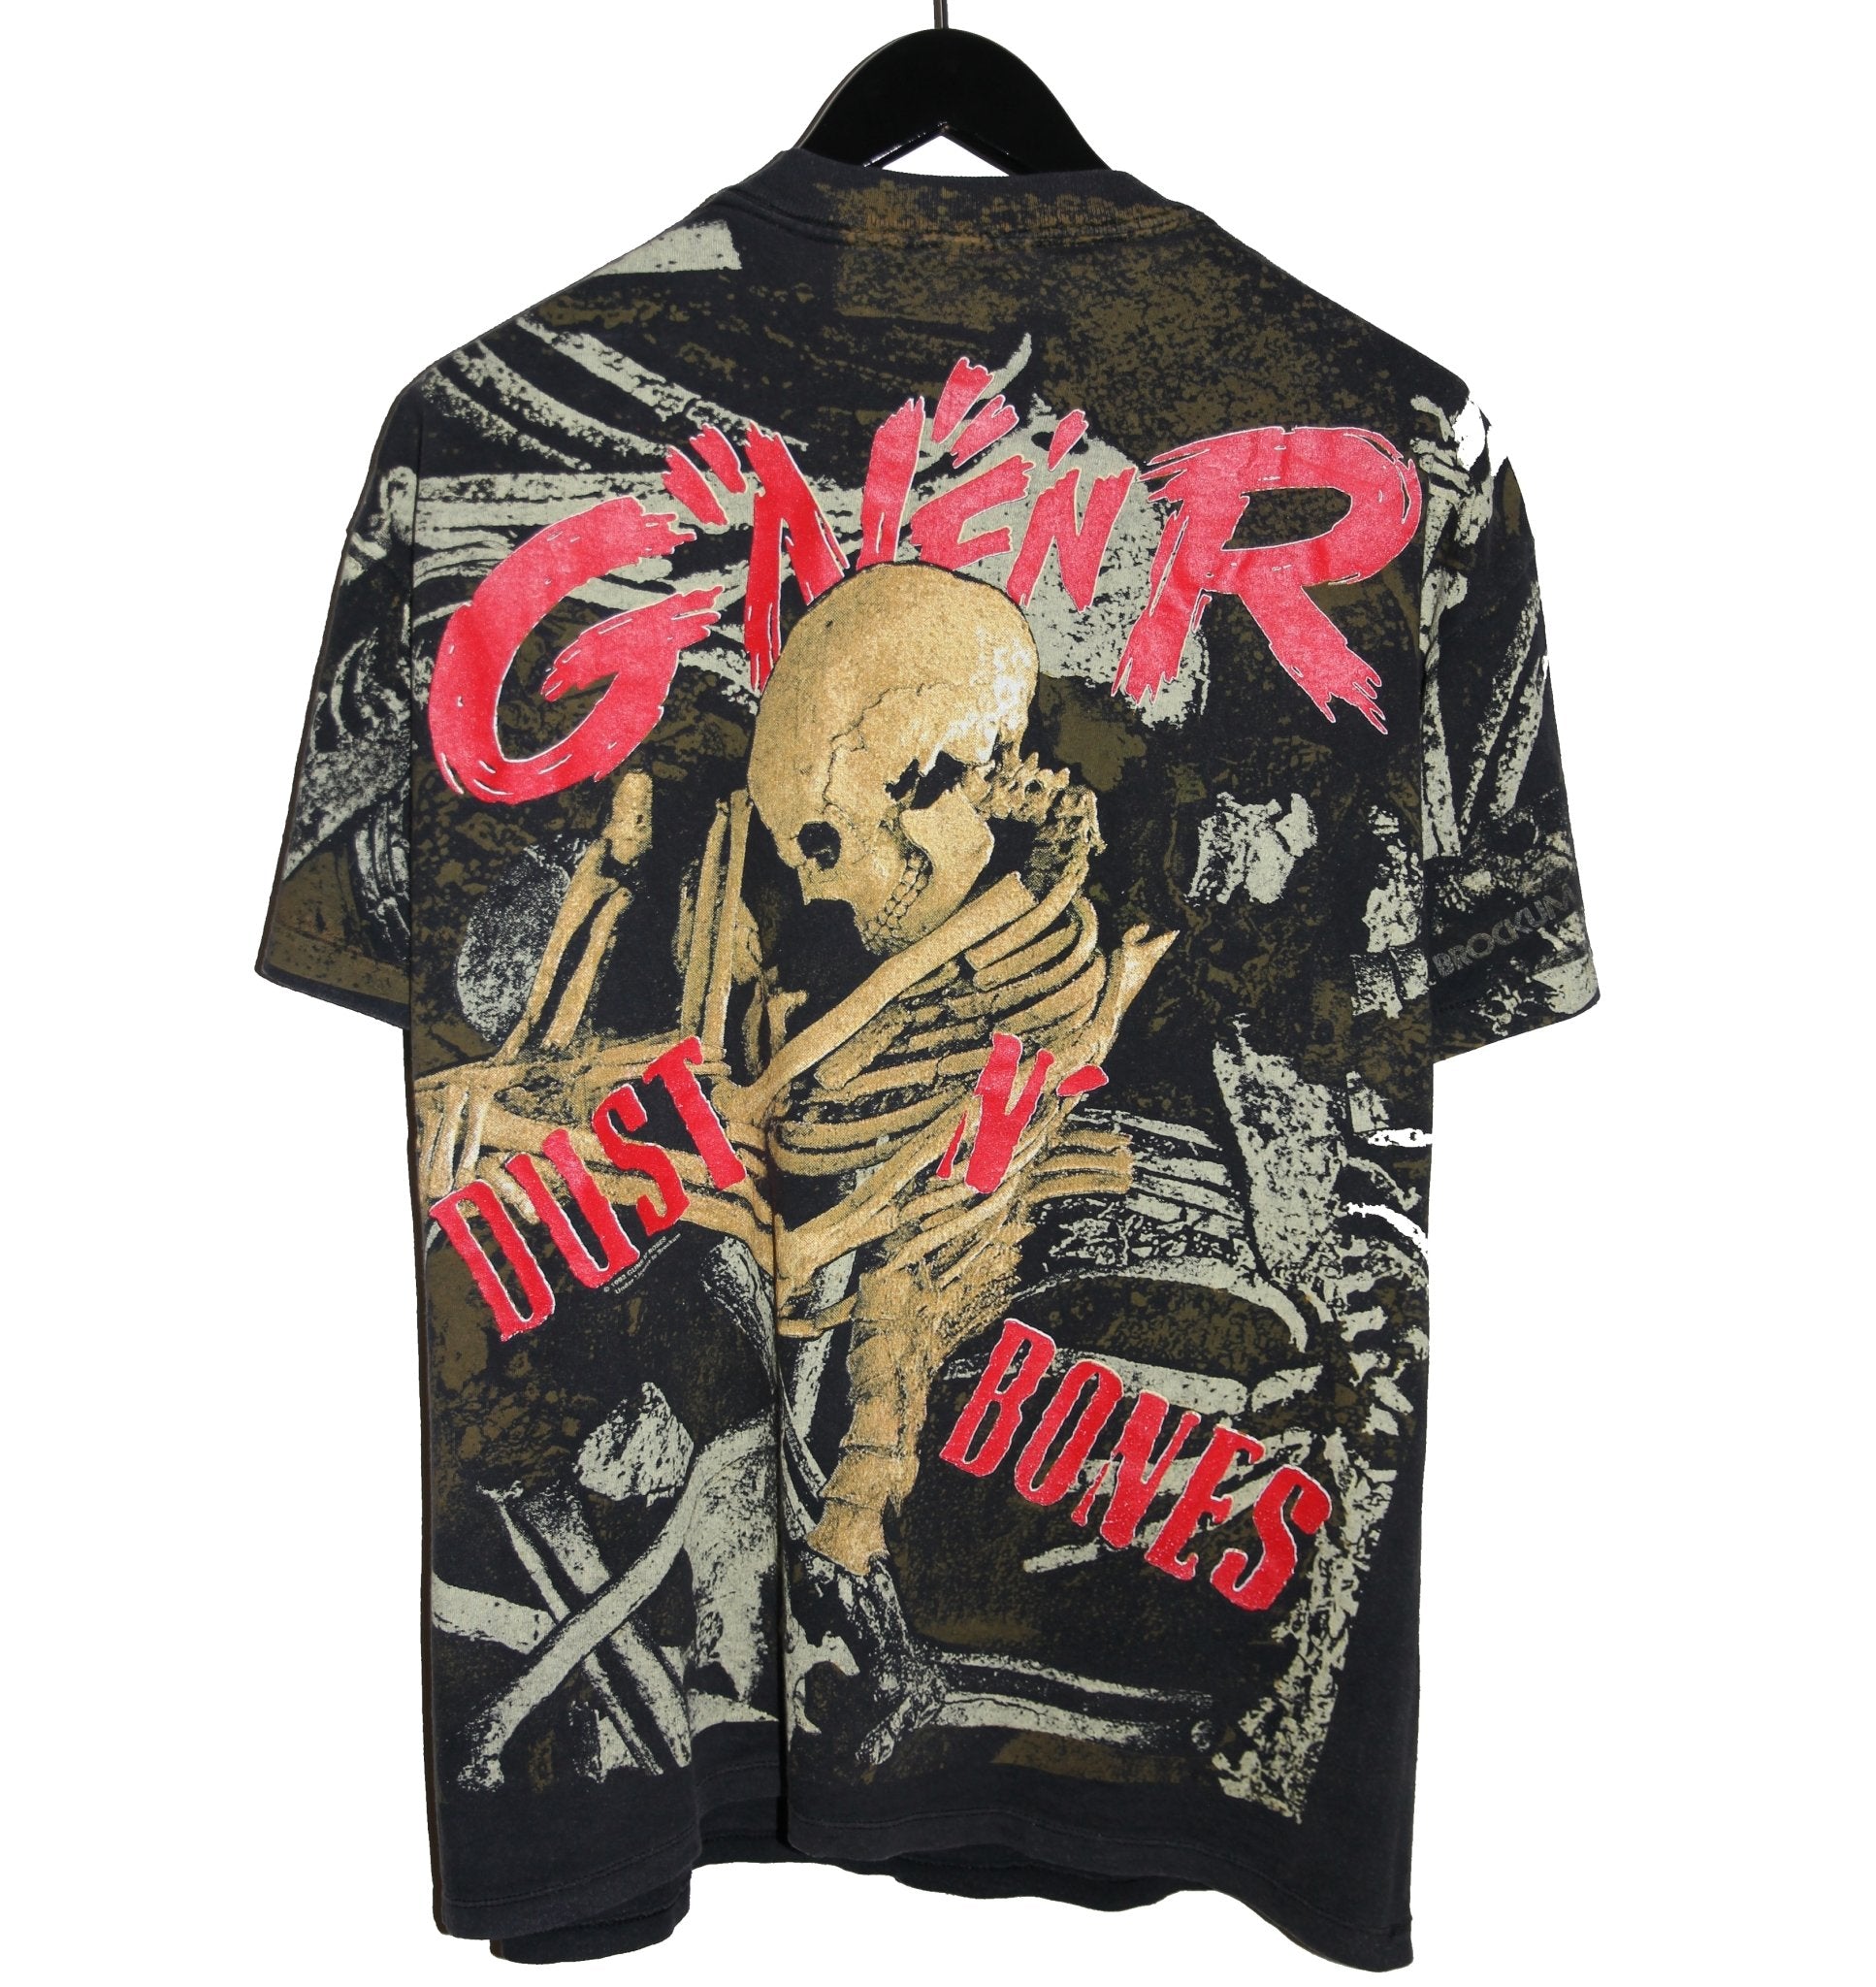 Guns N' Roses 1992 Dust N' Bones All Over Print Shirt - Faded AU